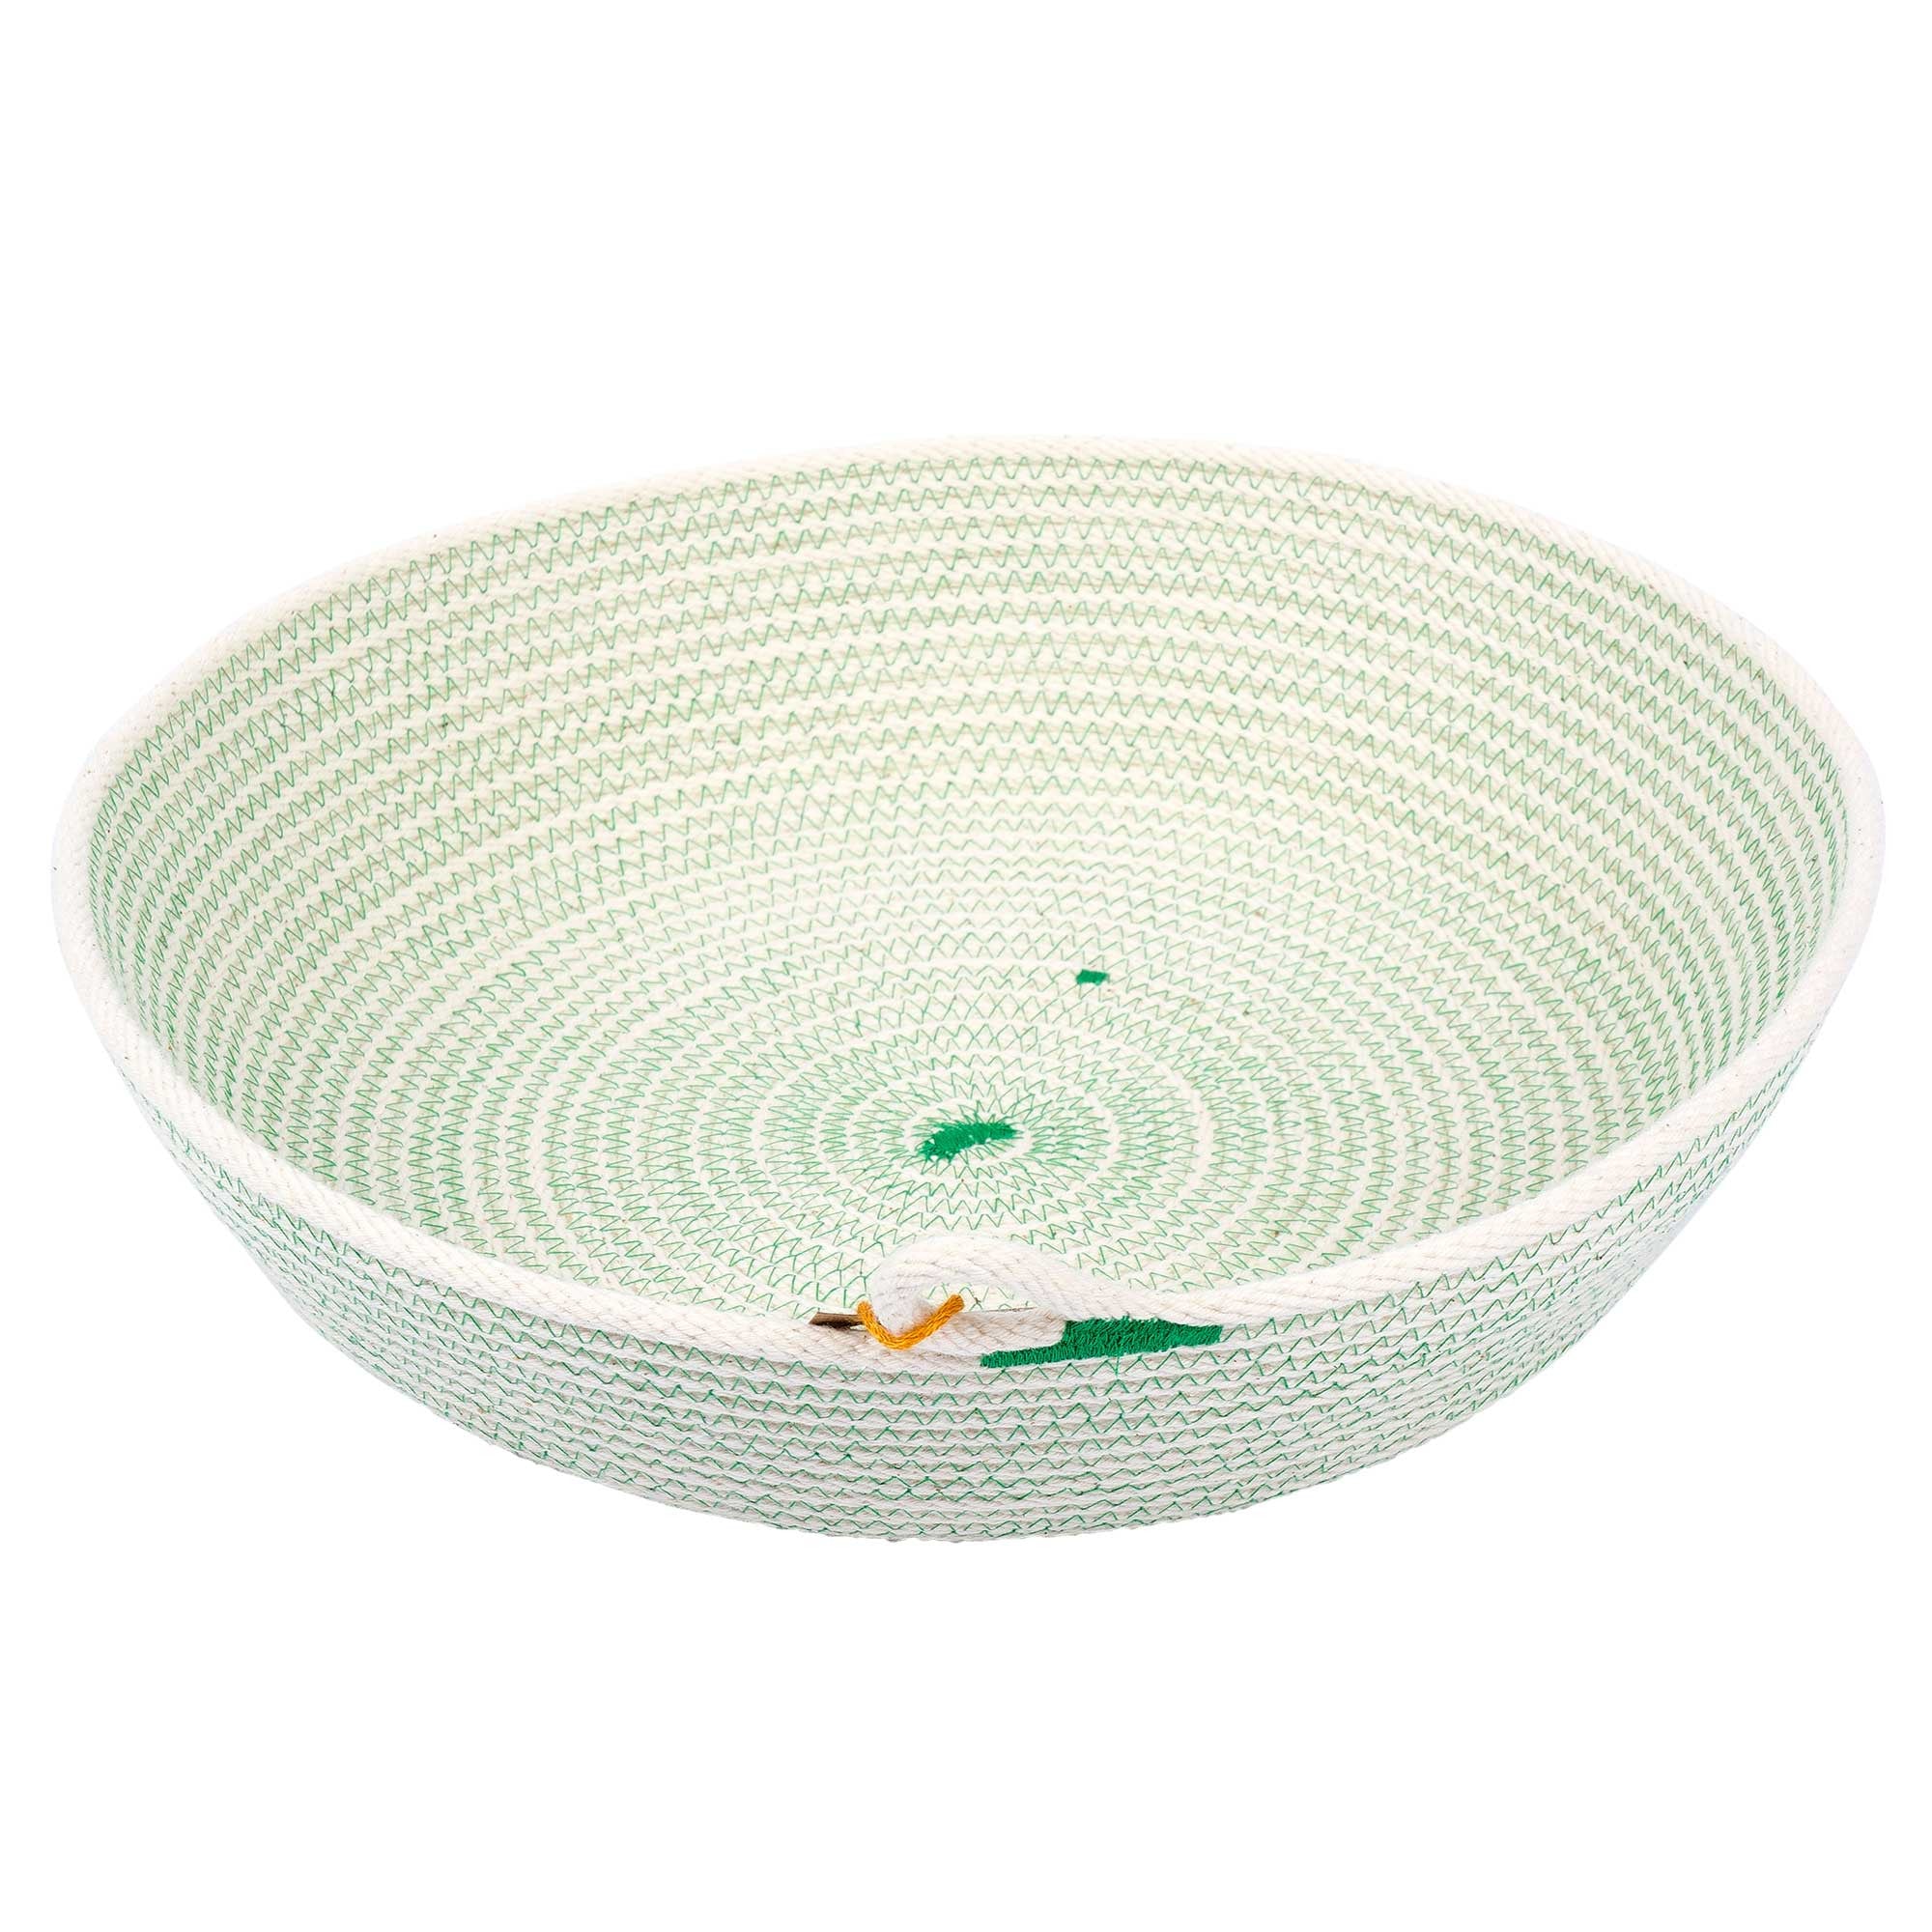 Medium natural flat bowl – green